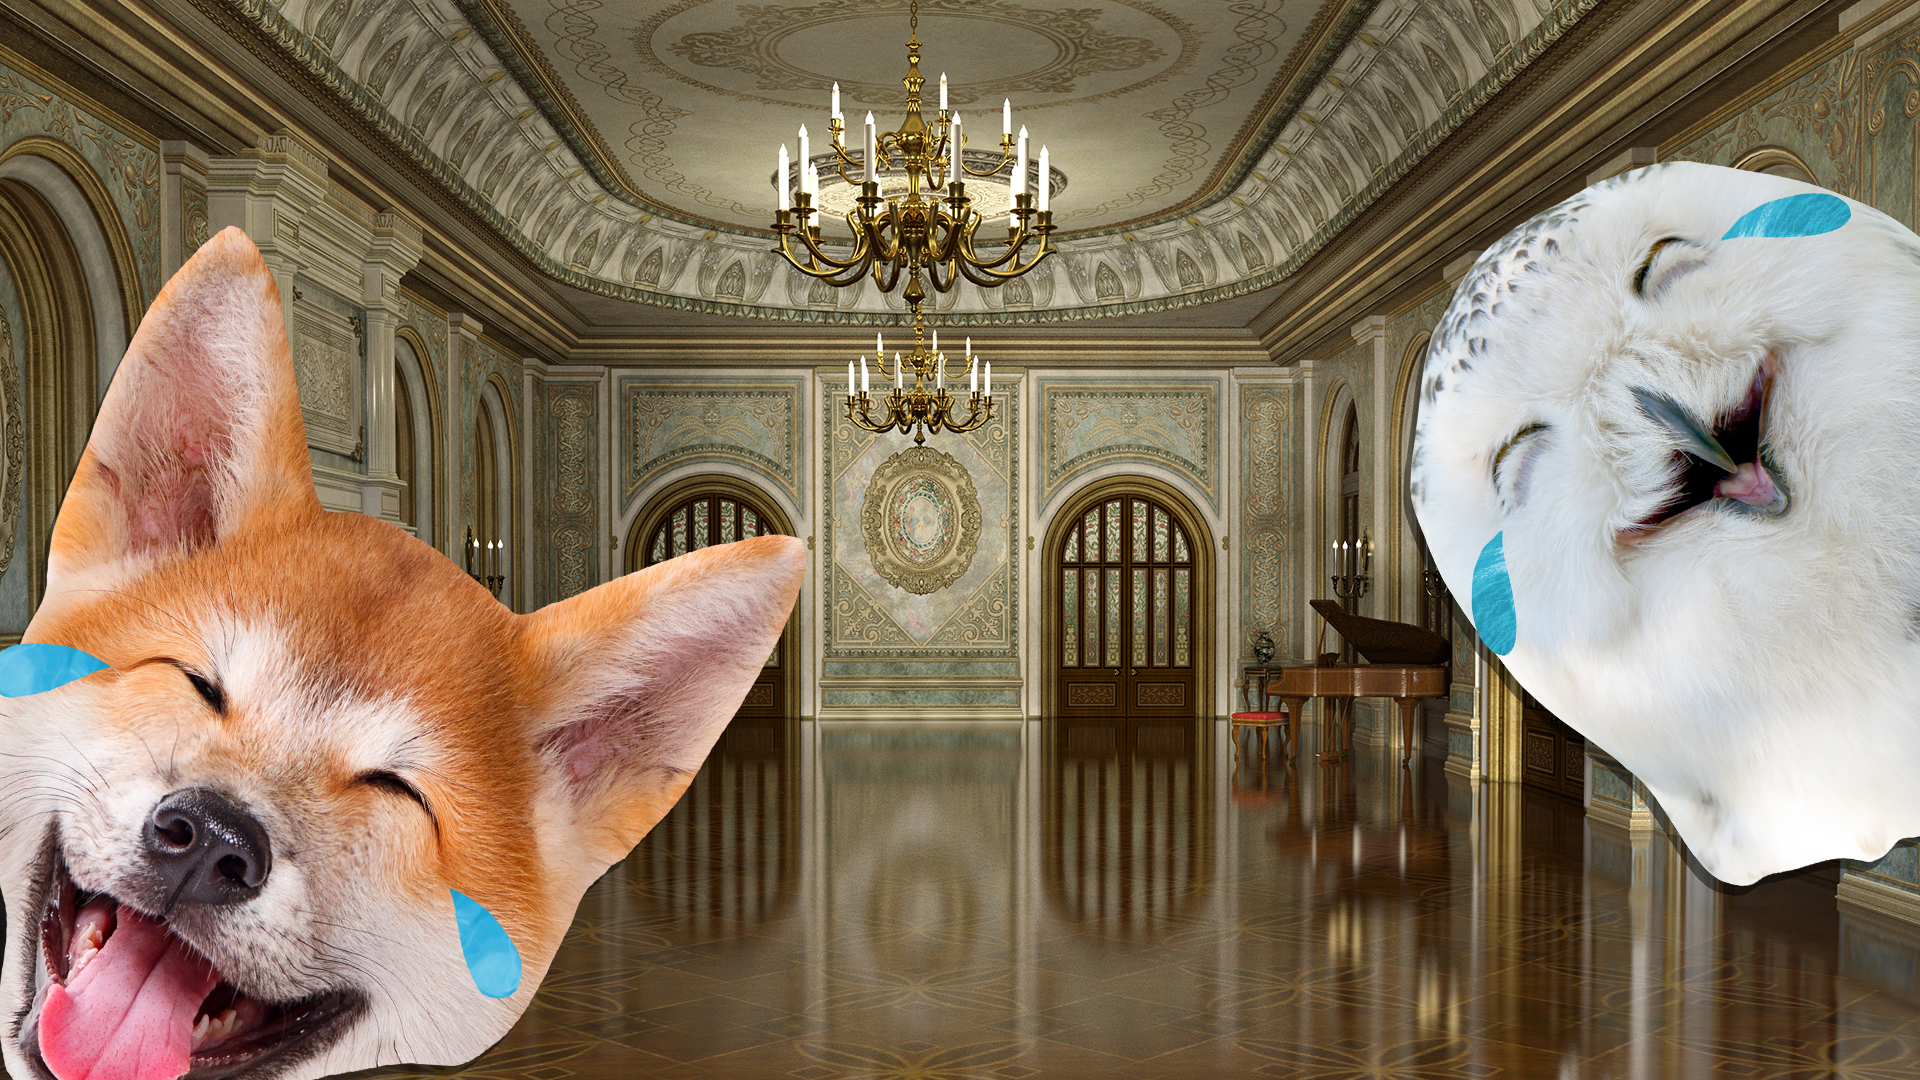 A fox and an owl laugh in a fancy ballroom